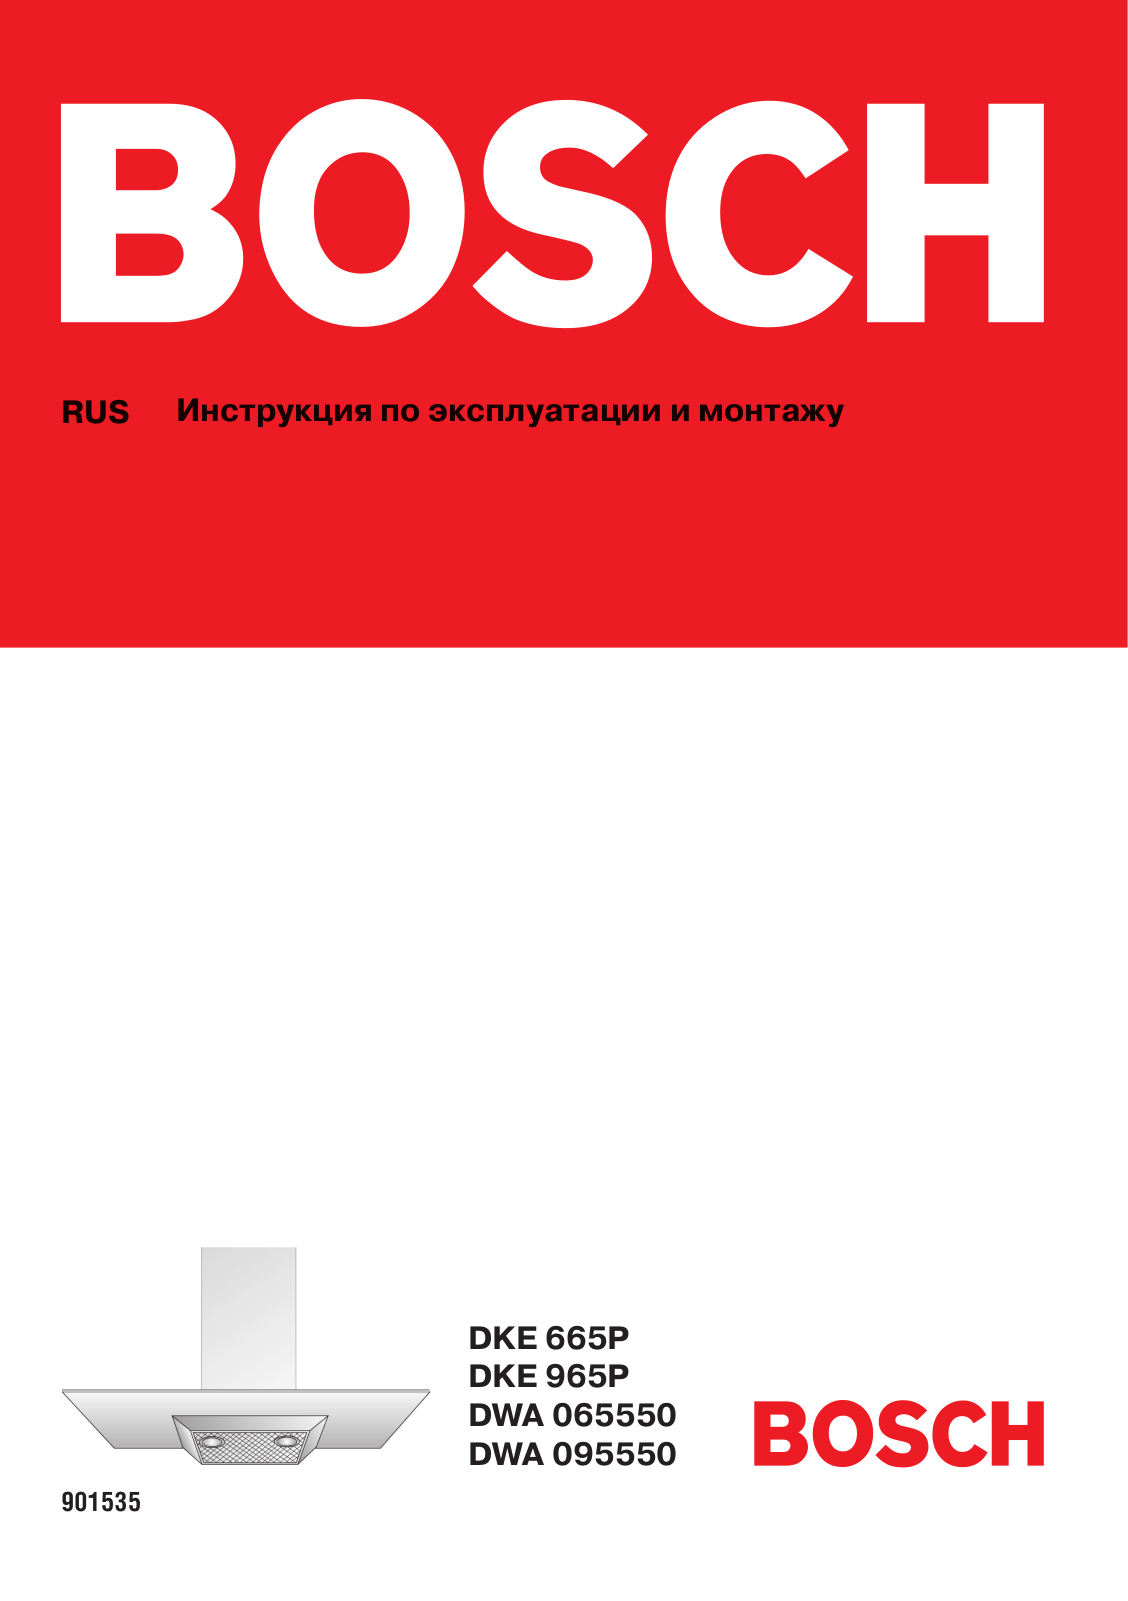 Bosch DWA093550 User Manual